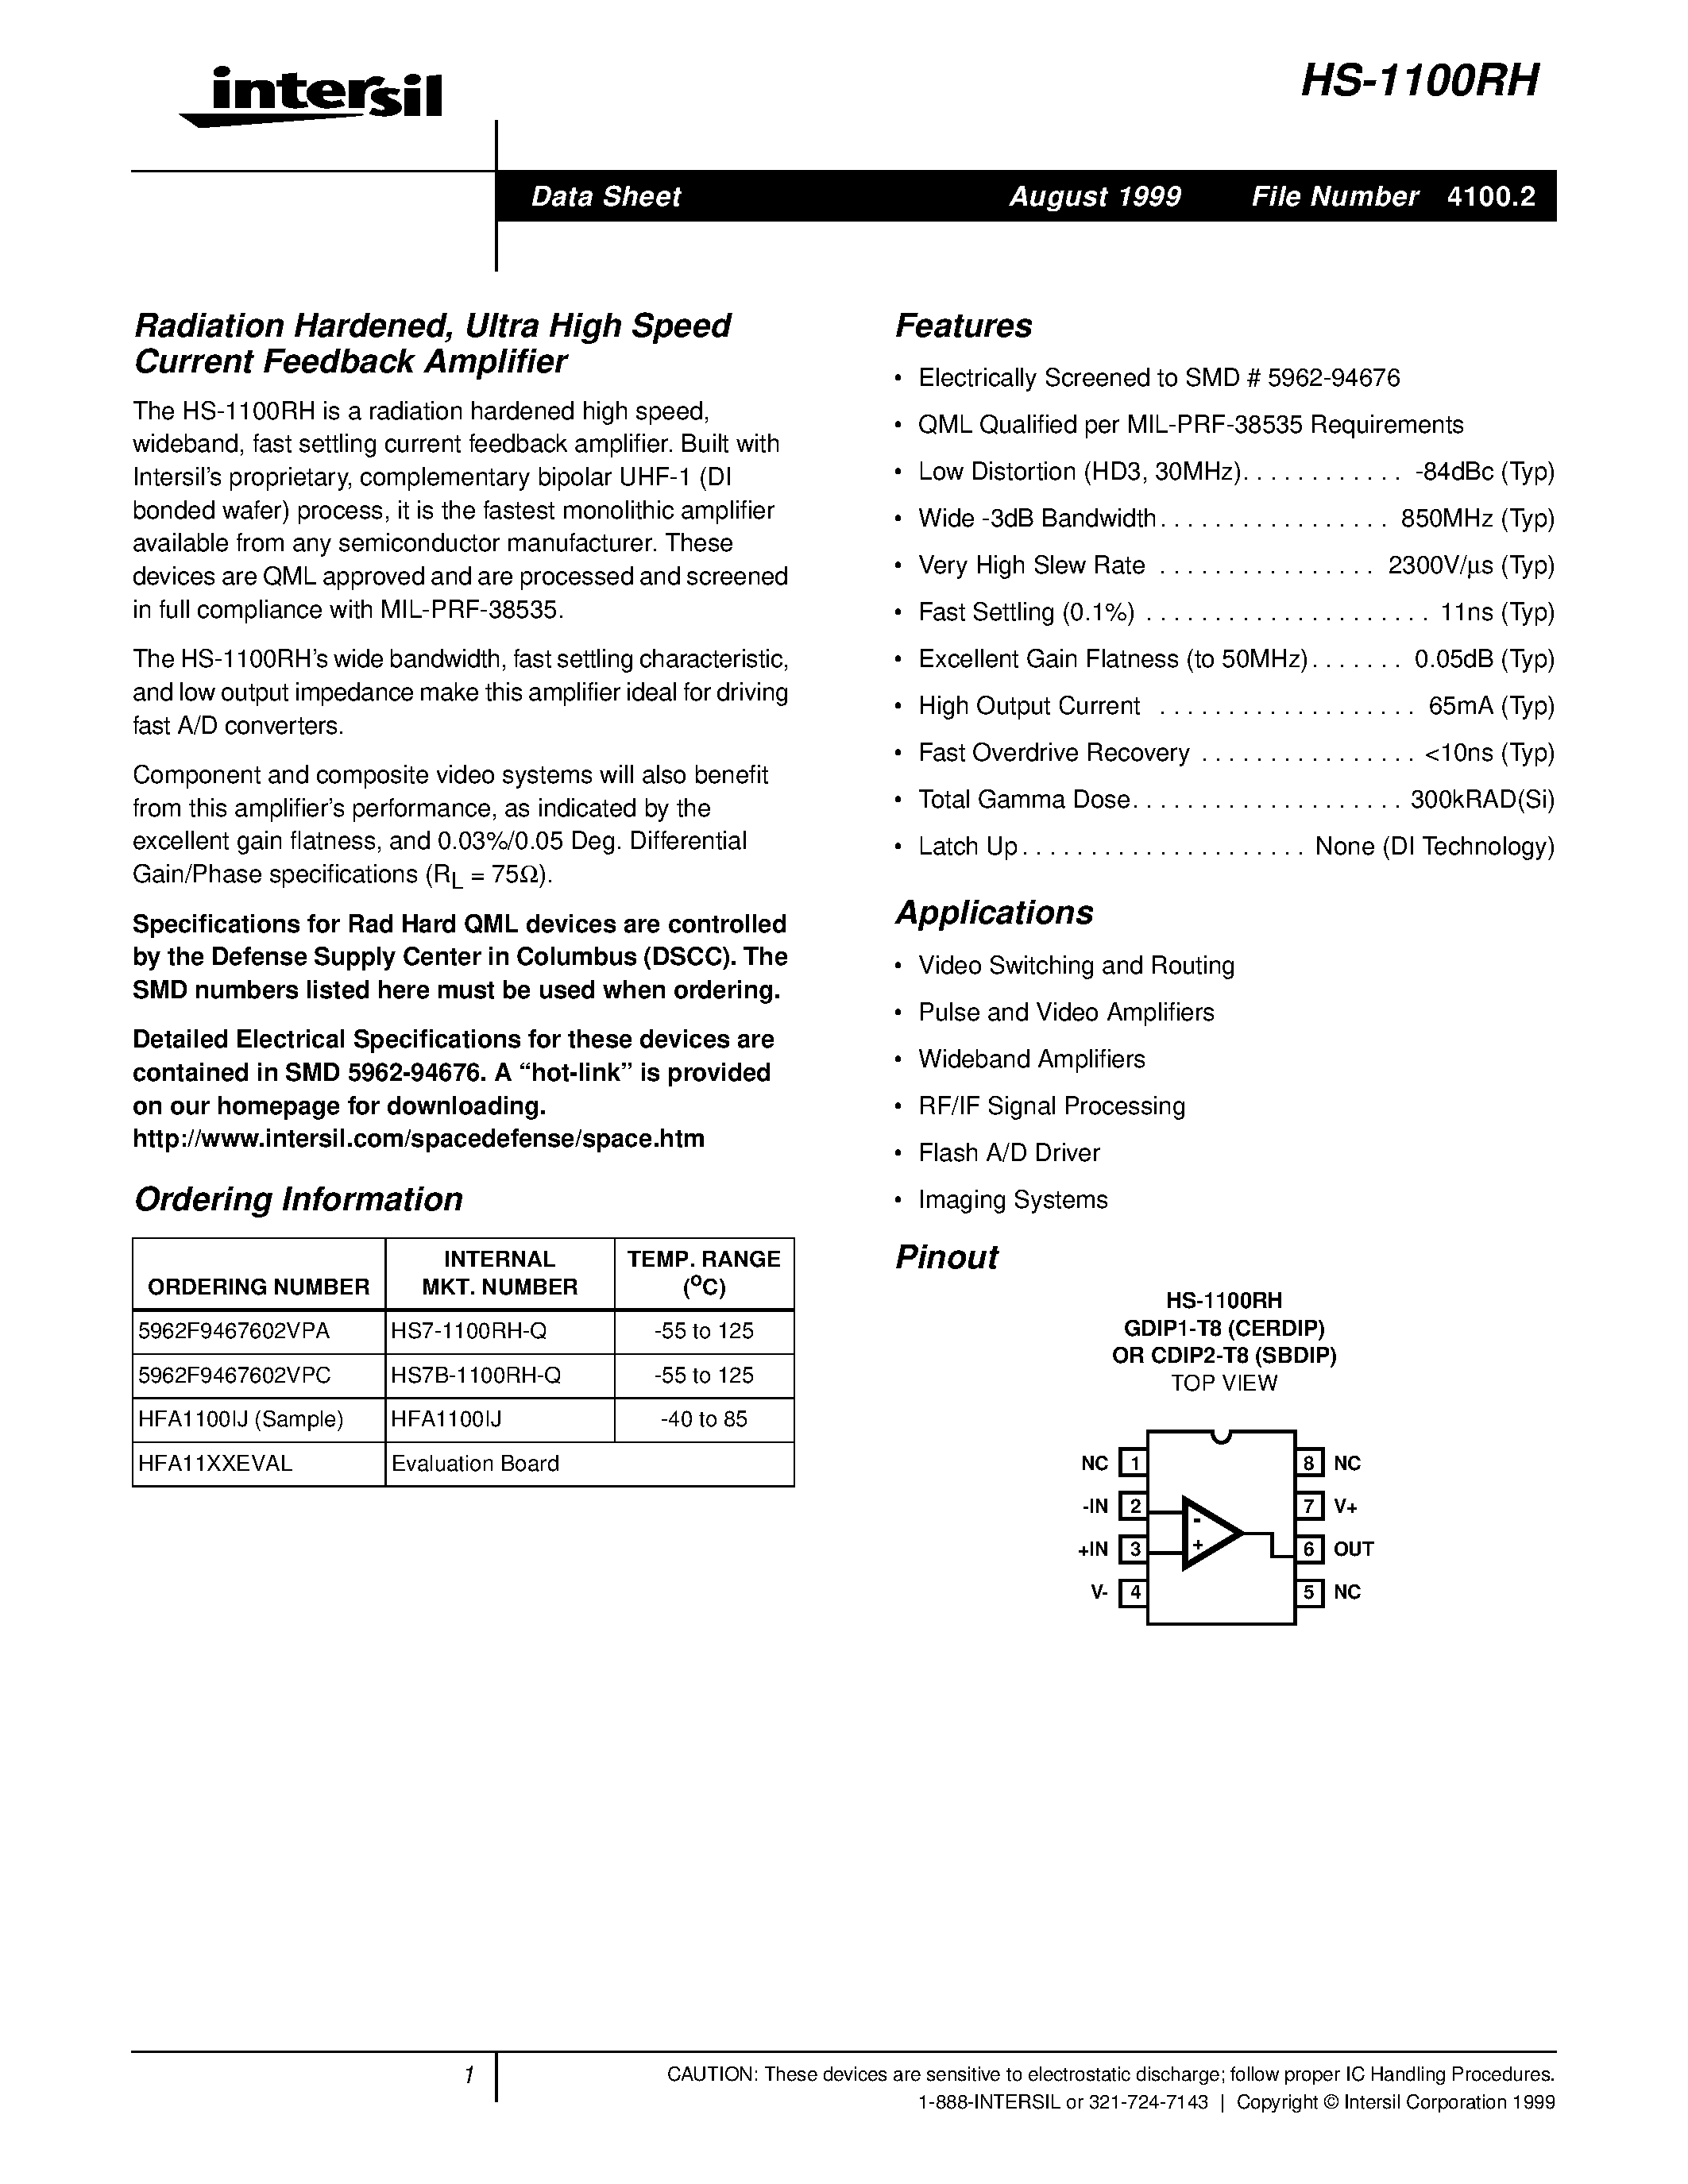 Даташит HS7-1100RH-Q - Radiation Hardened/ Ultra High Speed Current Feedback Amplifier страница 1